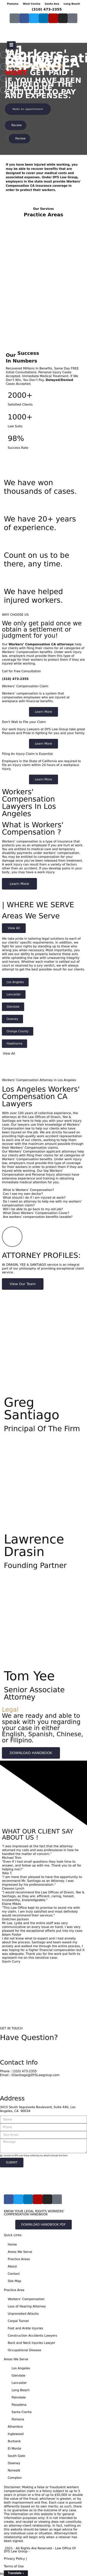 Law Offices of Drasin, Yee & Santiago - Los Angeles CA Lawyers